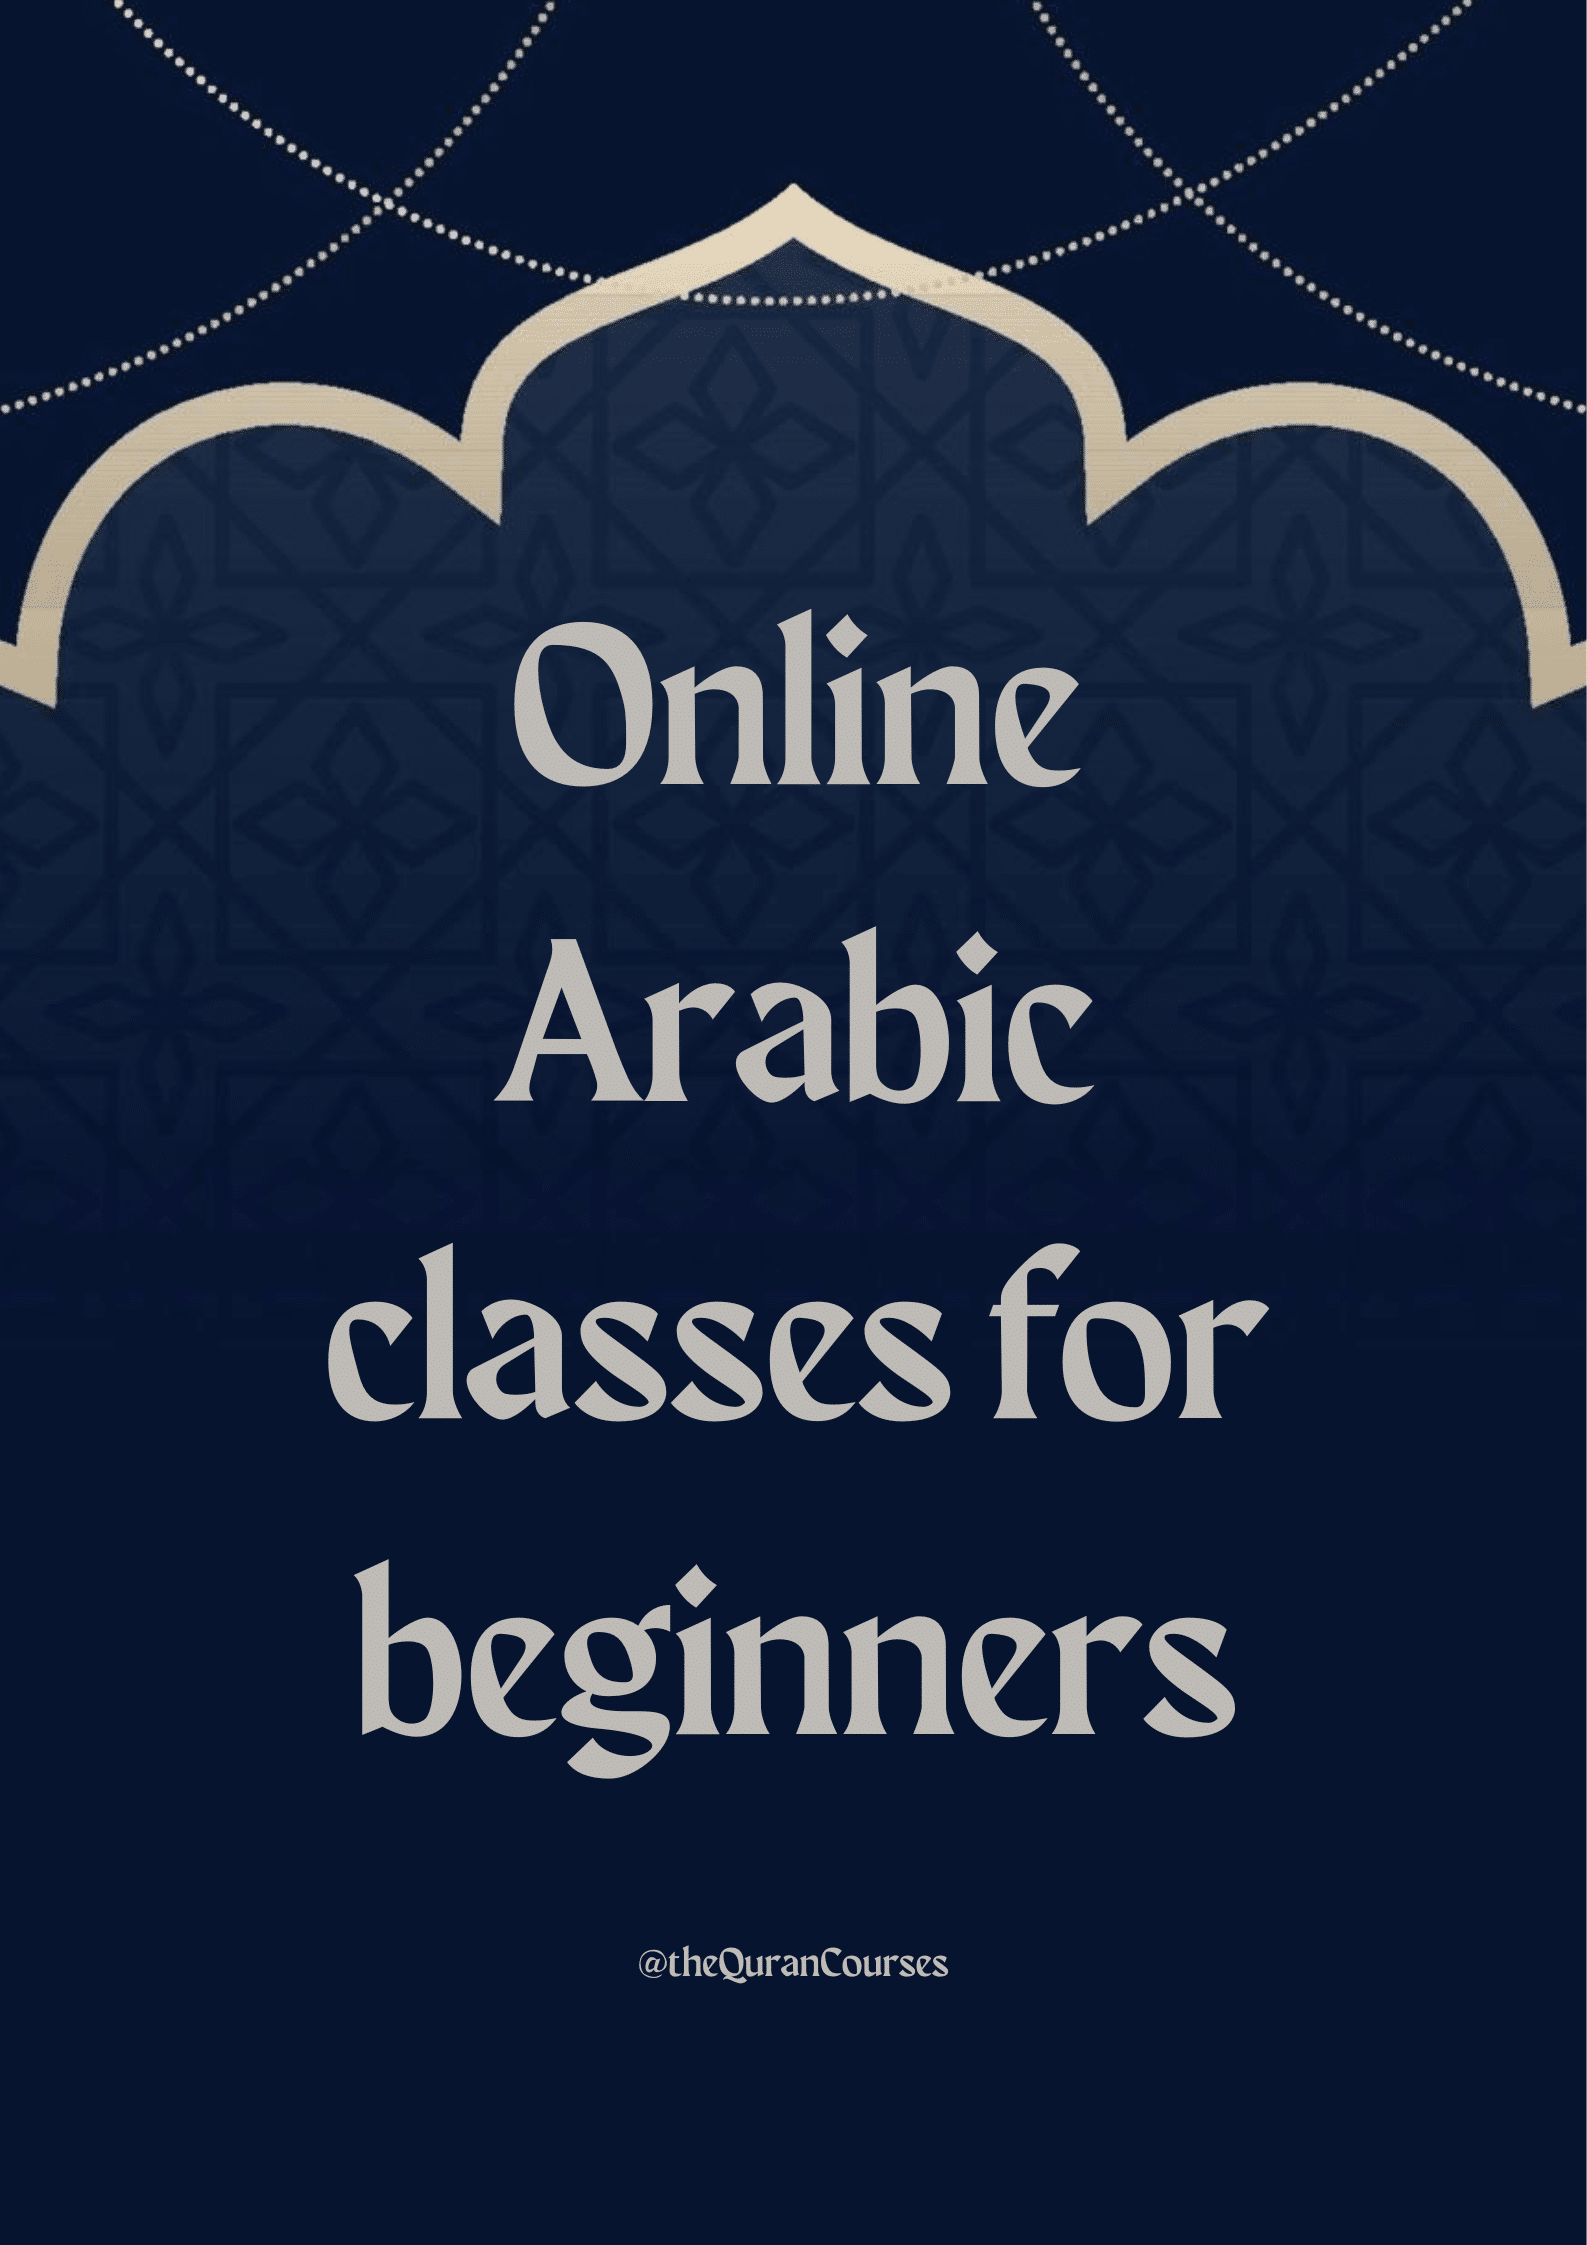 Online Arabic classes for beginners